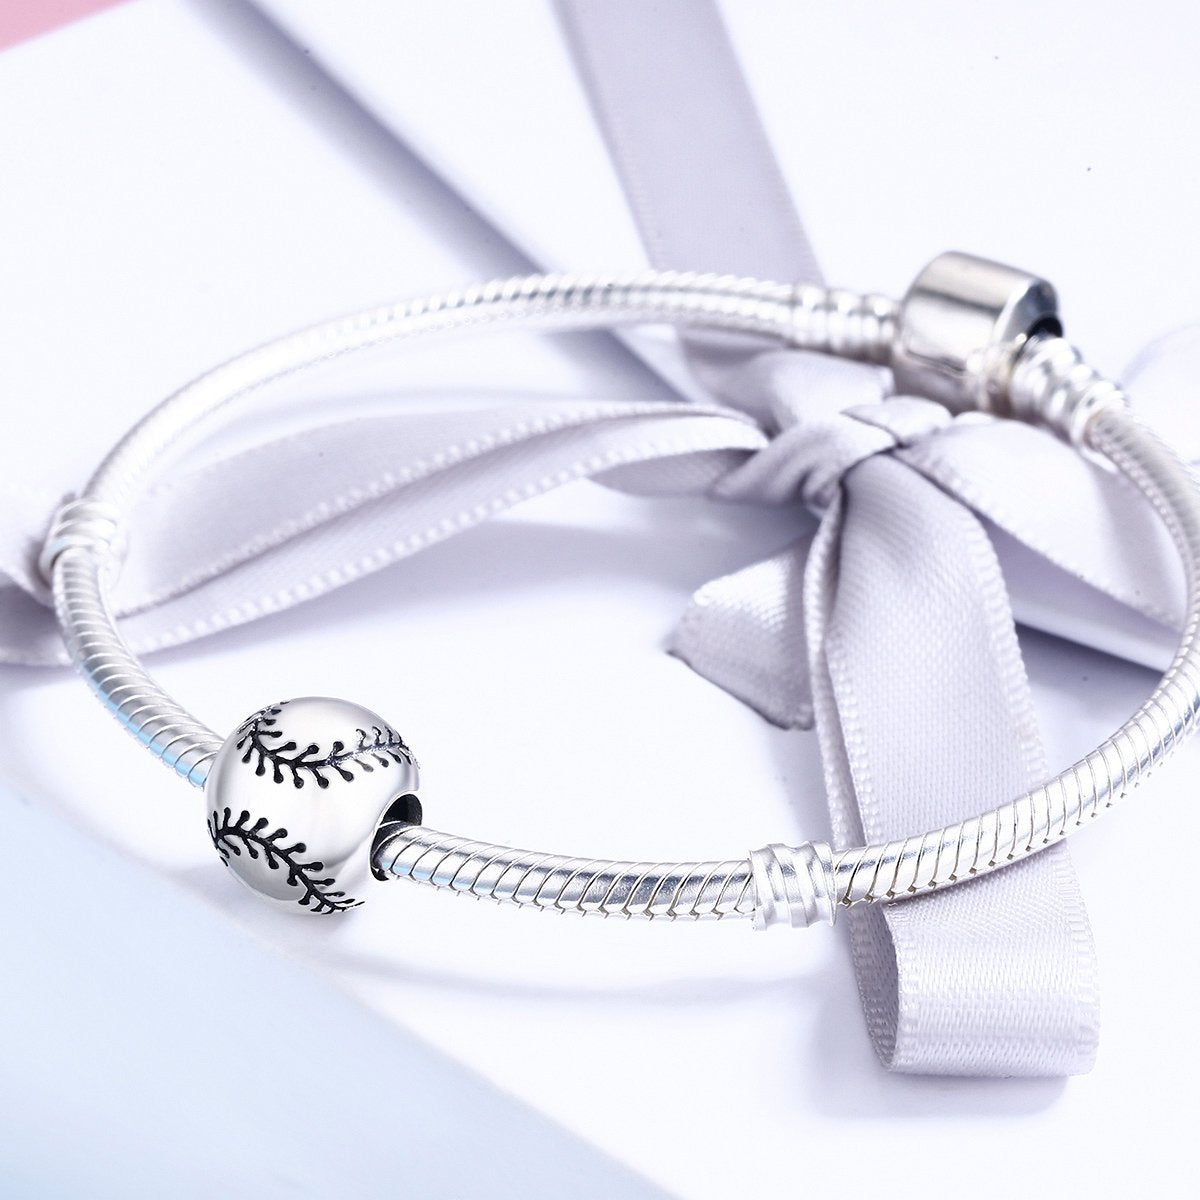 Sterling 925 silver charm the baseball bead pendant fits Pandora charm and European charm bracelet Xaxe.com